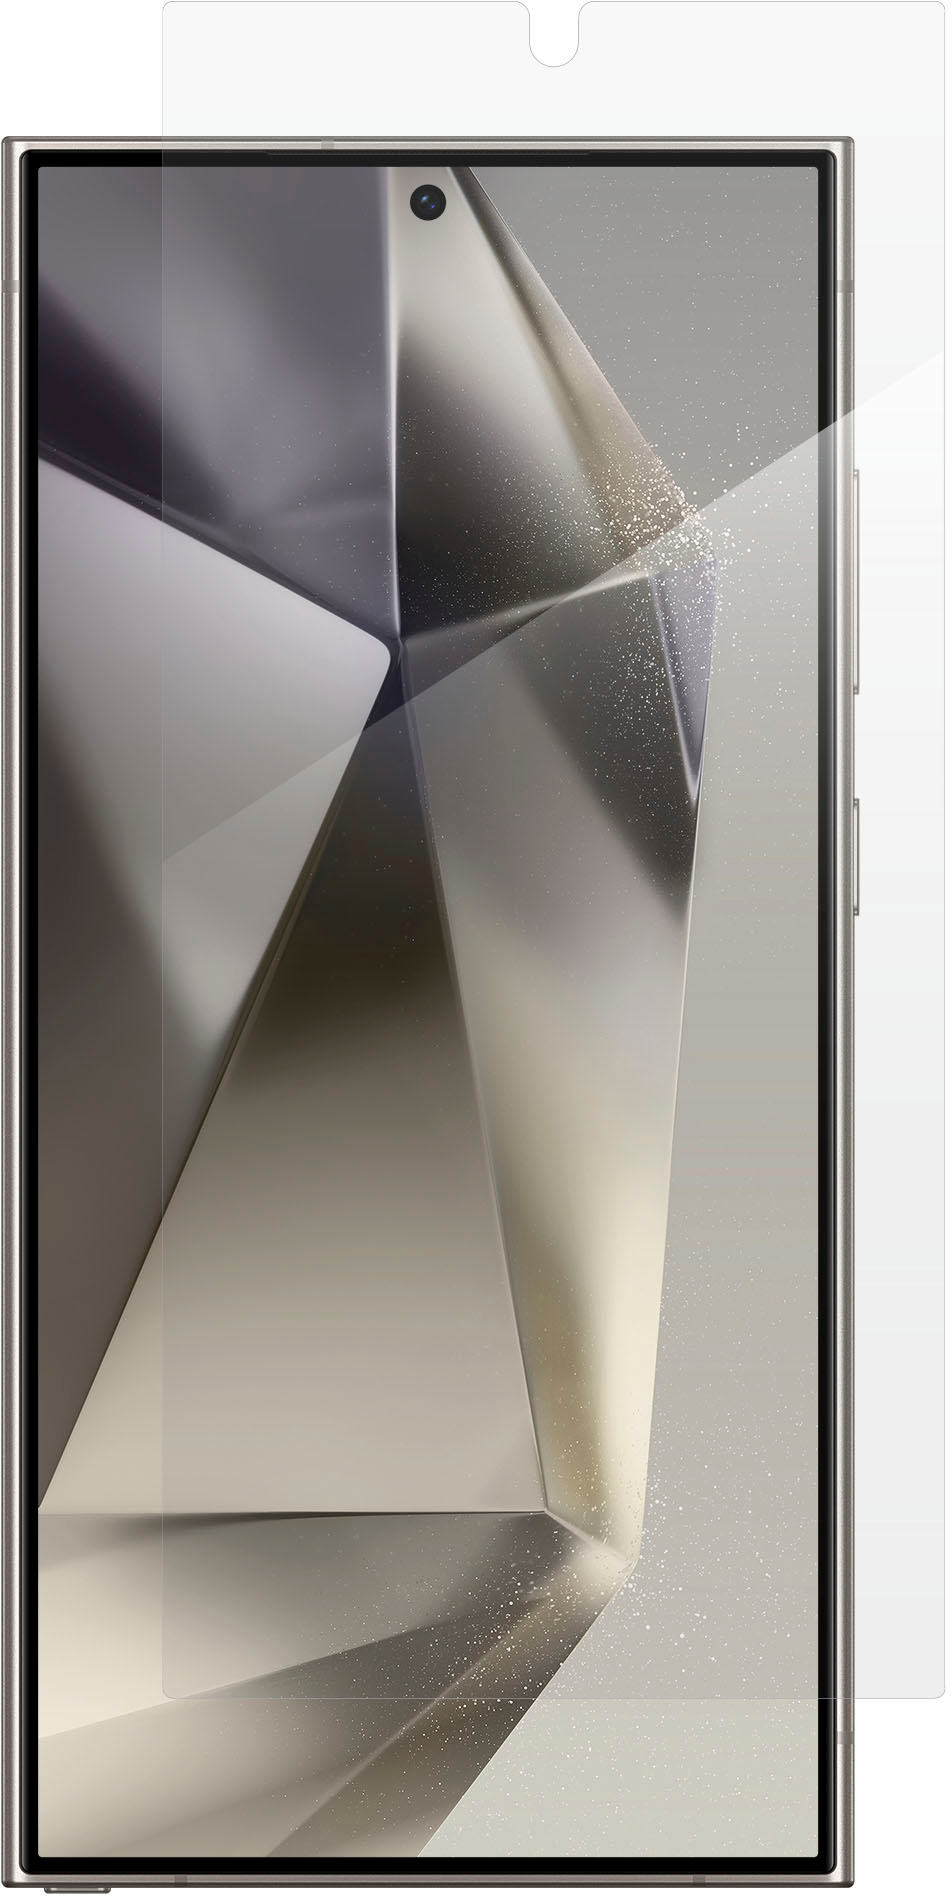 ZAGG InvisibleShield Glass Fusion XTR3 Screen Protector for